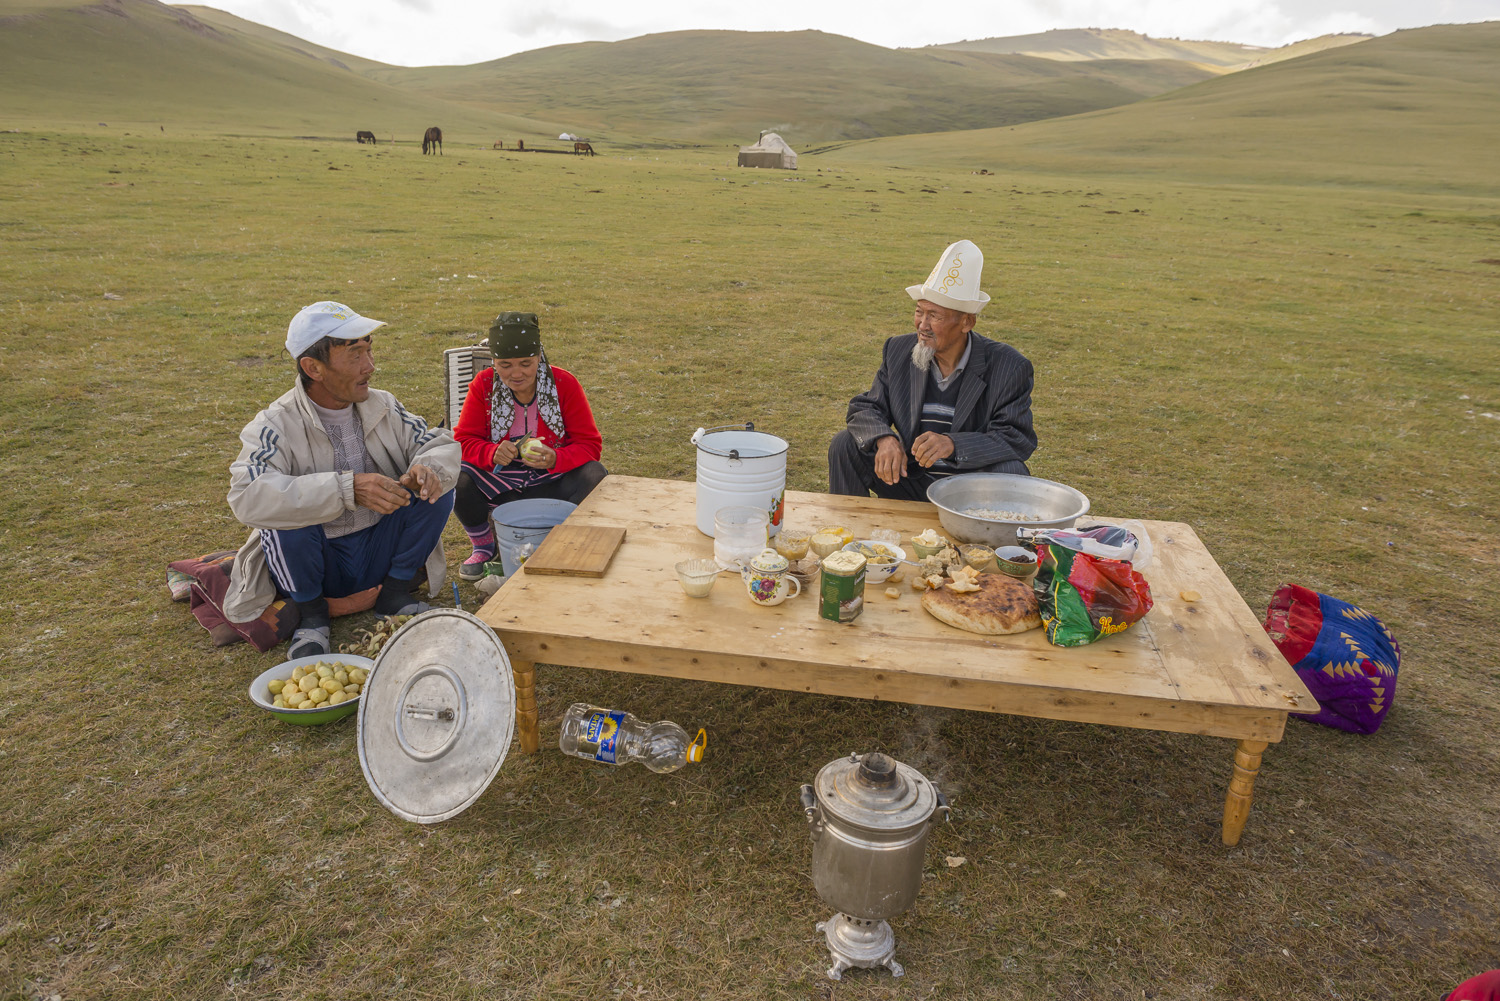 kyrgyzstan-nomads-lake-song-kul-jo-kearney-video-photography-soviet-yurt-family-camping-eating.jpg